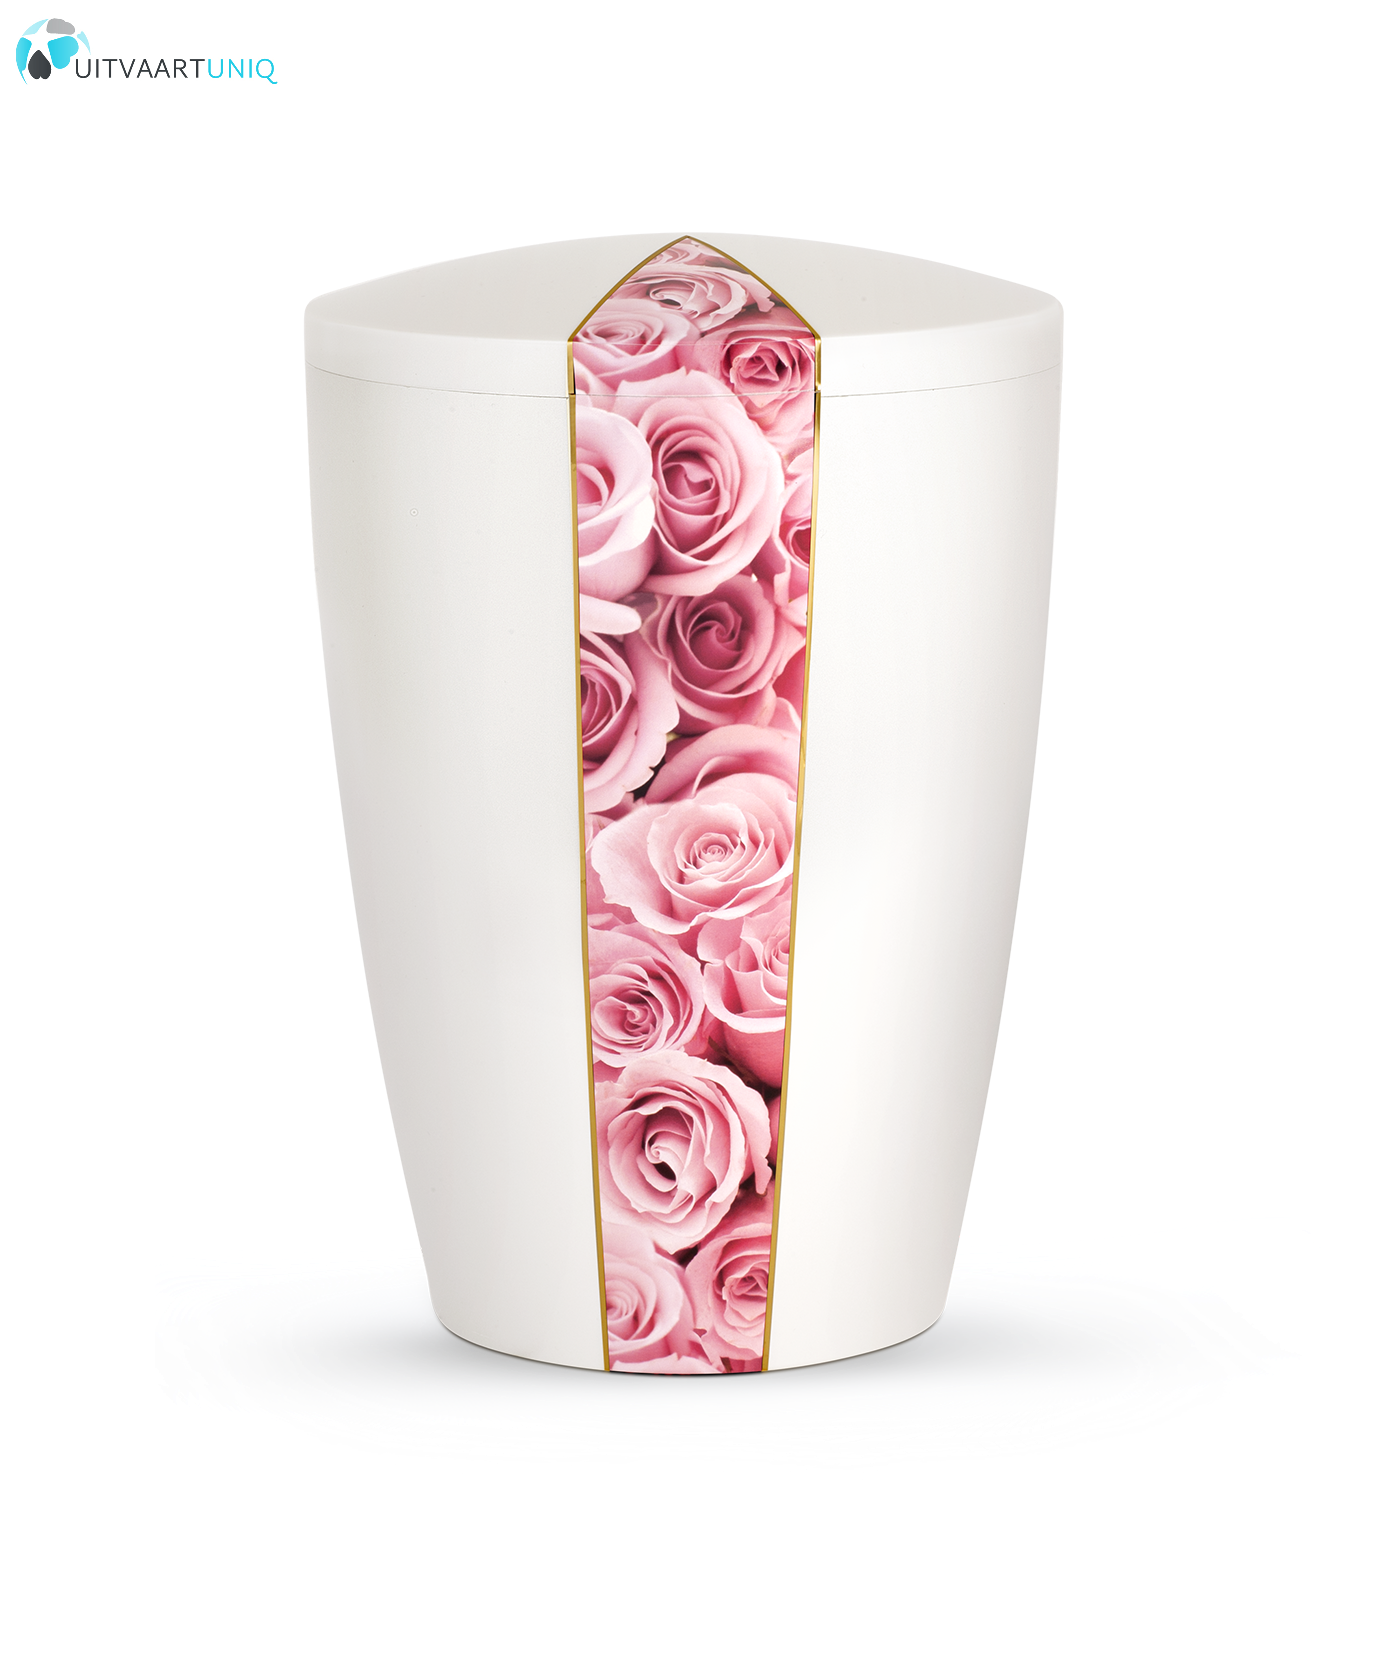  Urn wit parlemoer roze rozen - bio